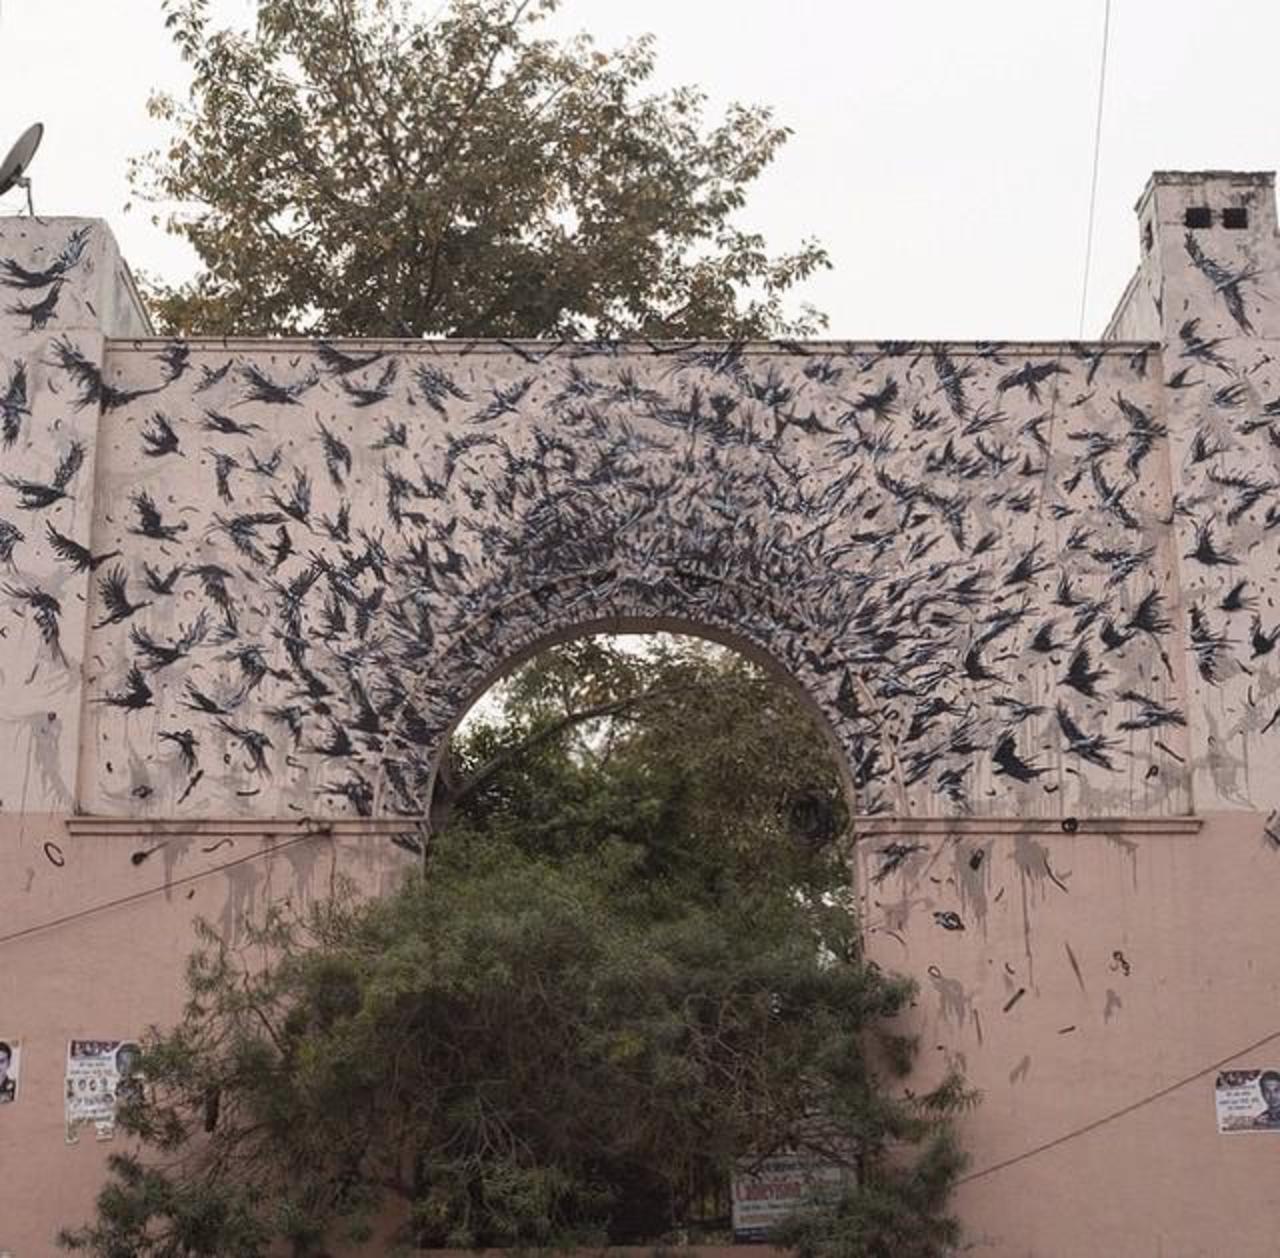 When Street Art meets Nature by DALeast in Delhi, India 

#art #arte #graffiti #streetart http://t.co/t2rxNvzYm6